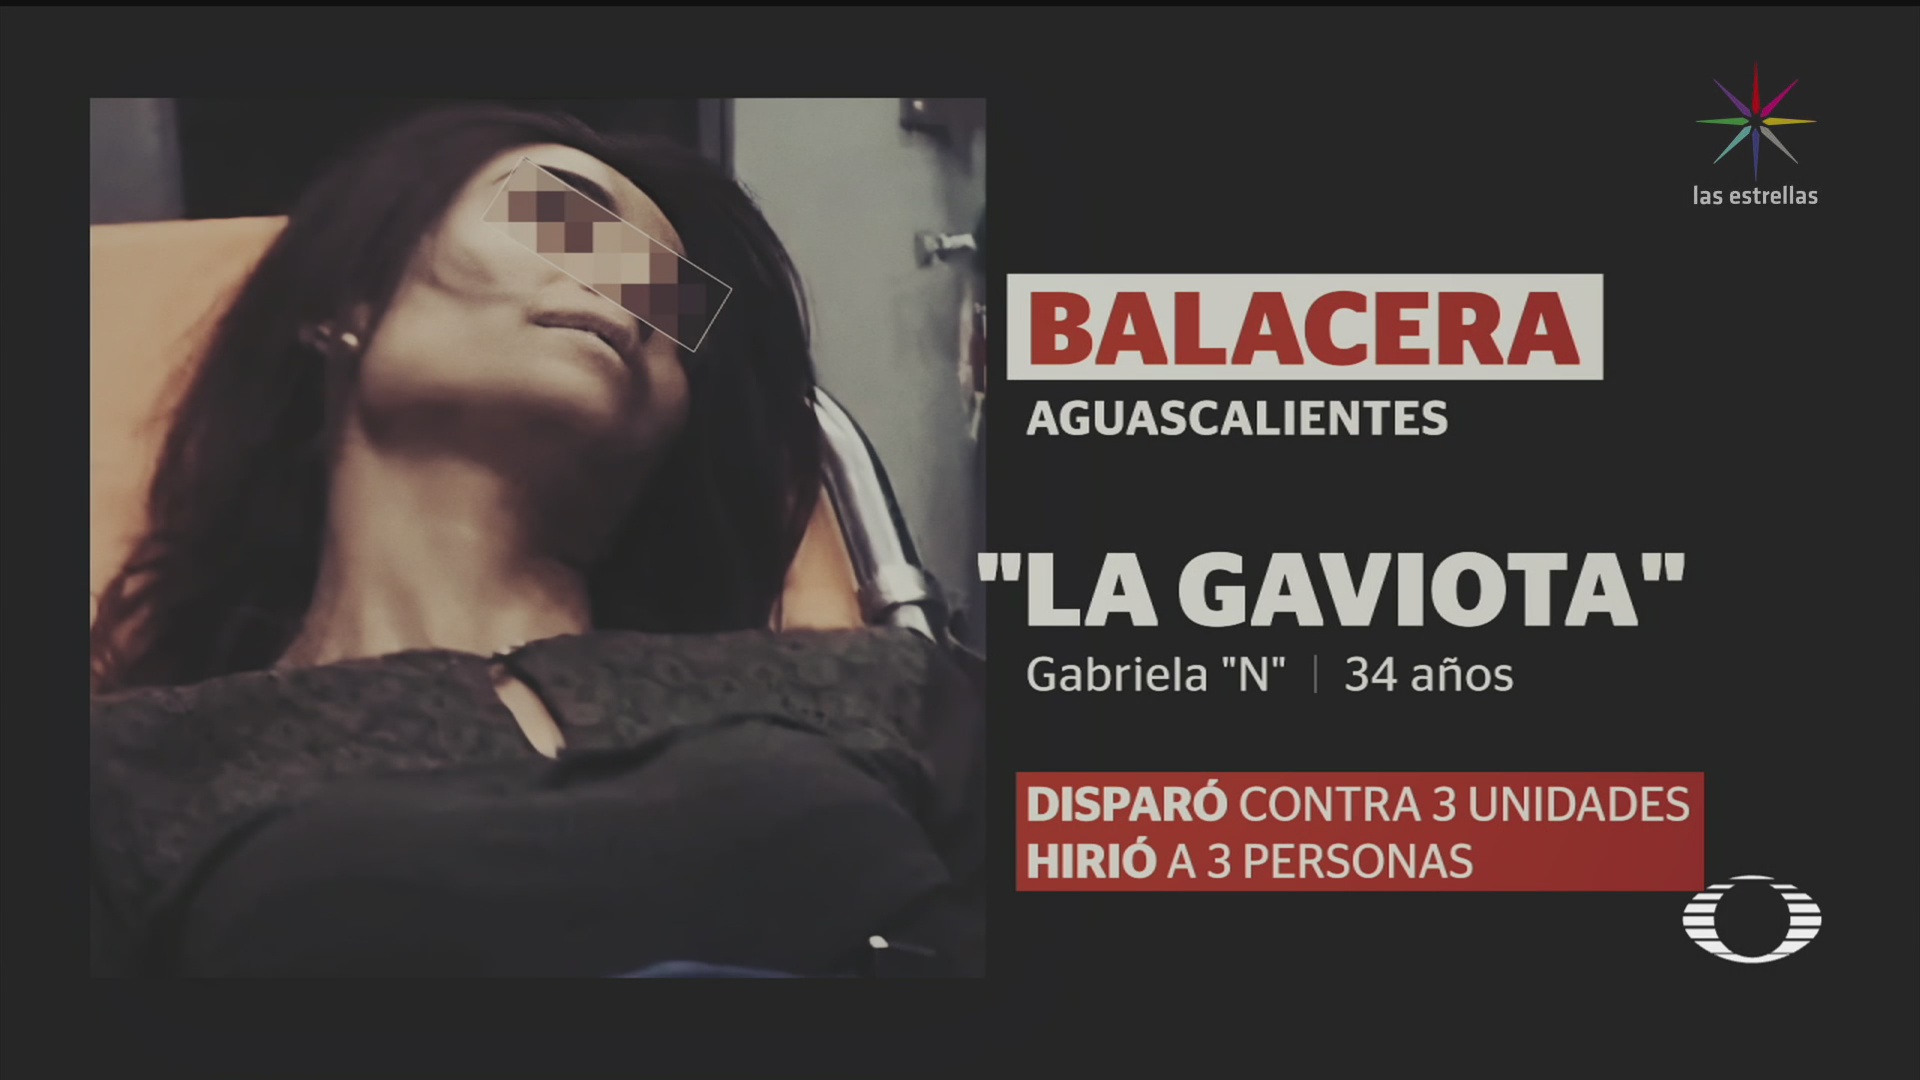 Foto: Mujer Roba Arma Dispara Aguascalientes Video 27 Enero 2020